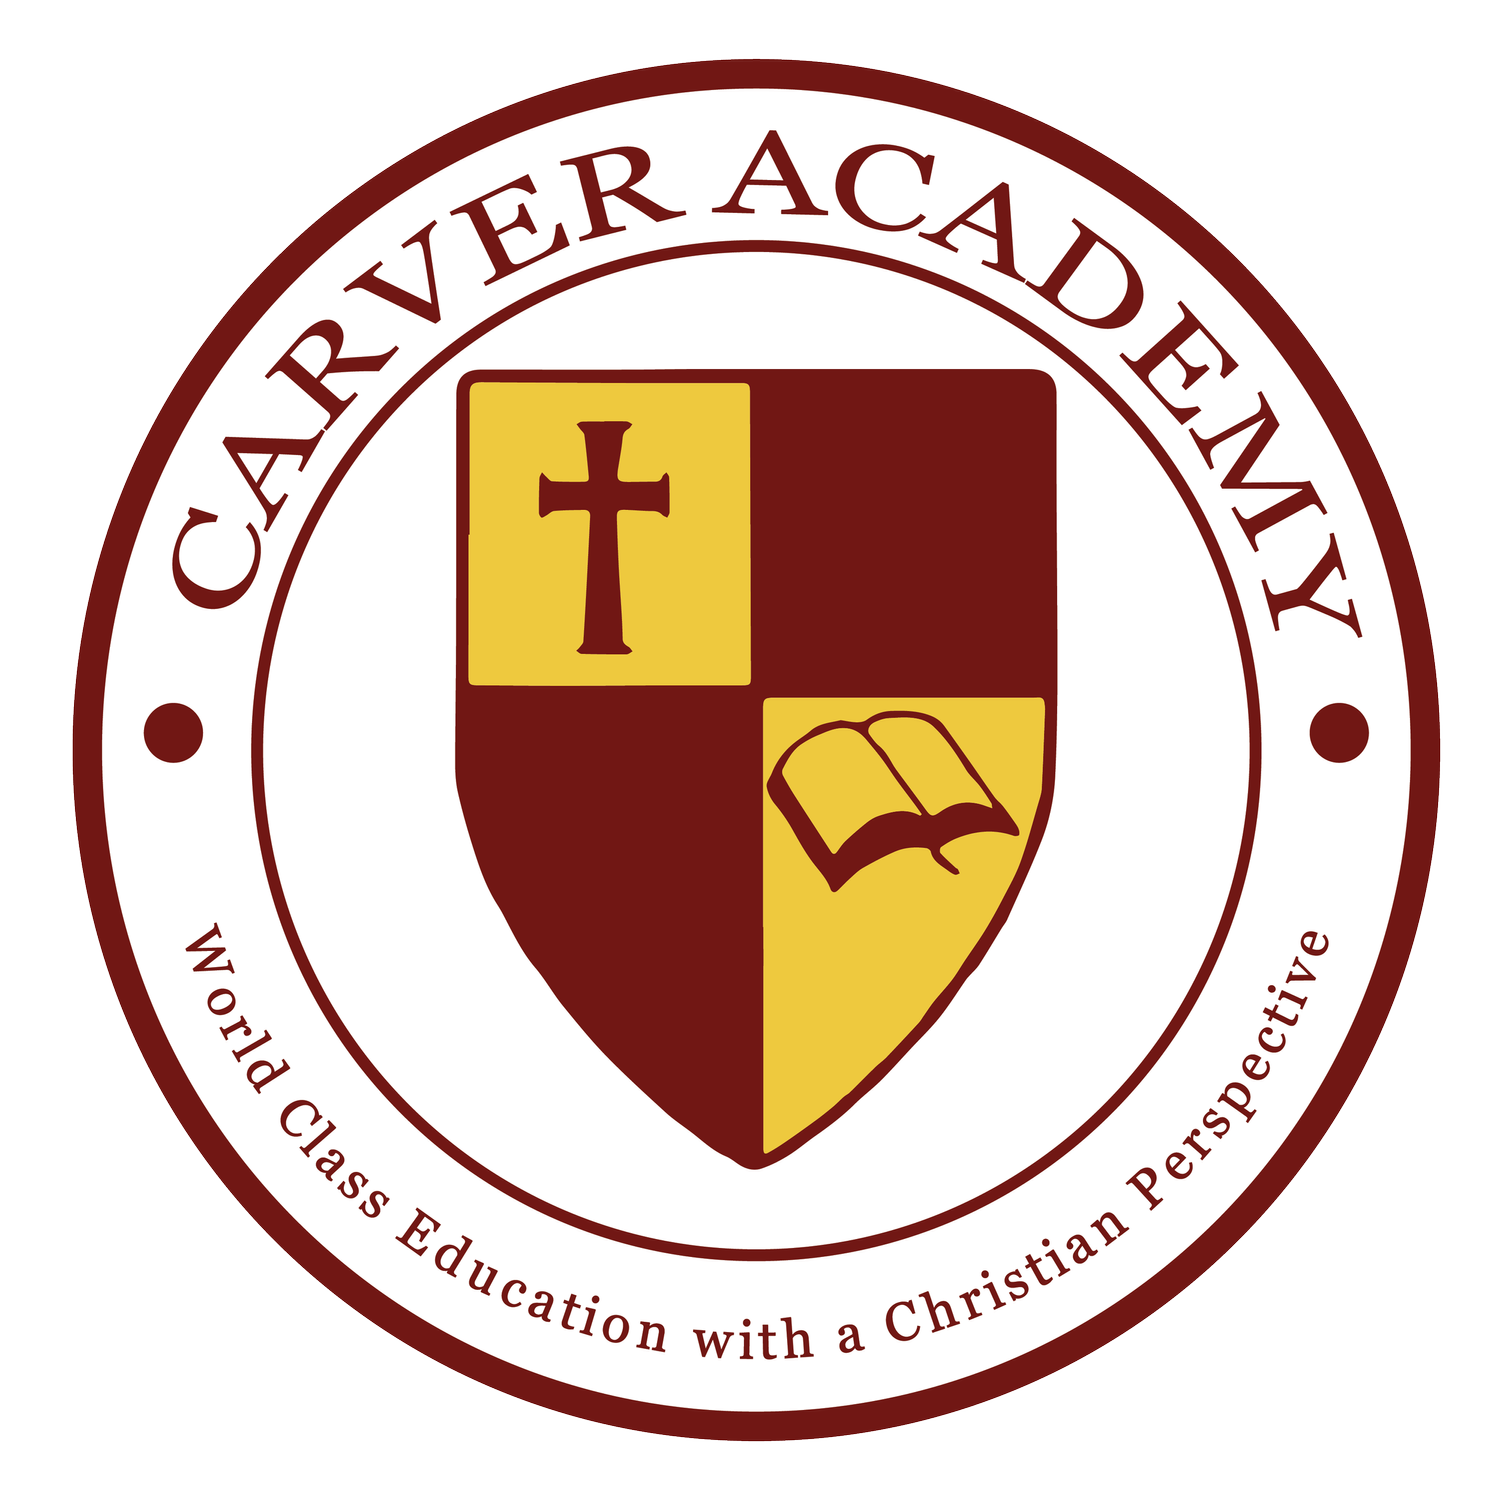 Carver Academy